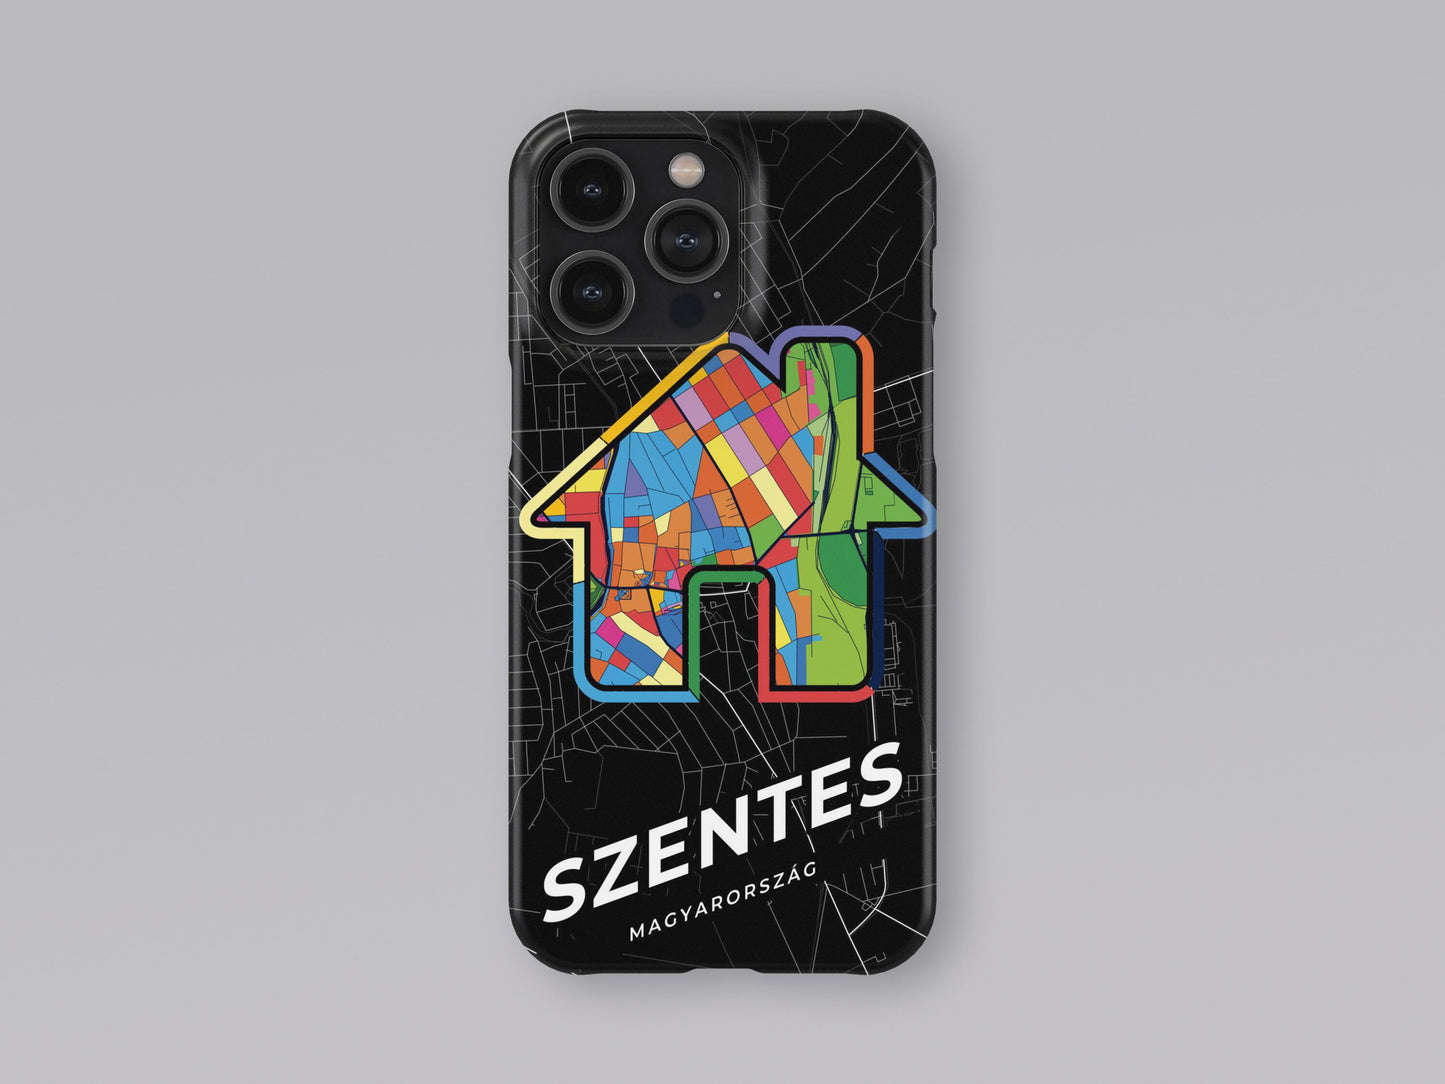 Szentes Hungary slim phone case with colorful icon 3